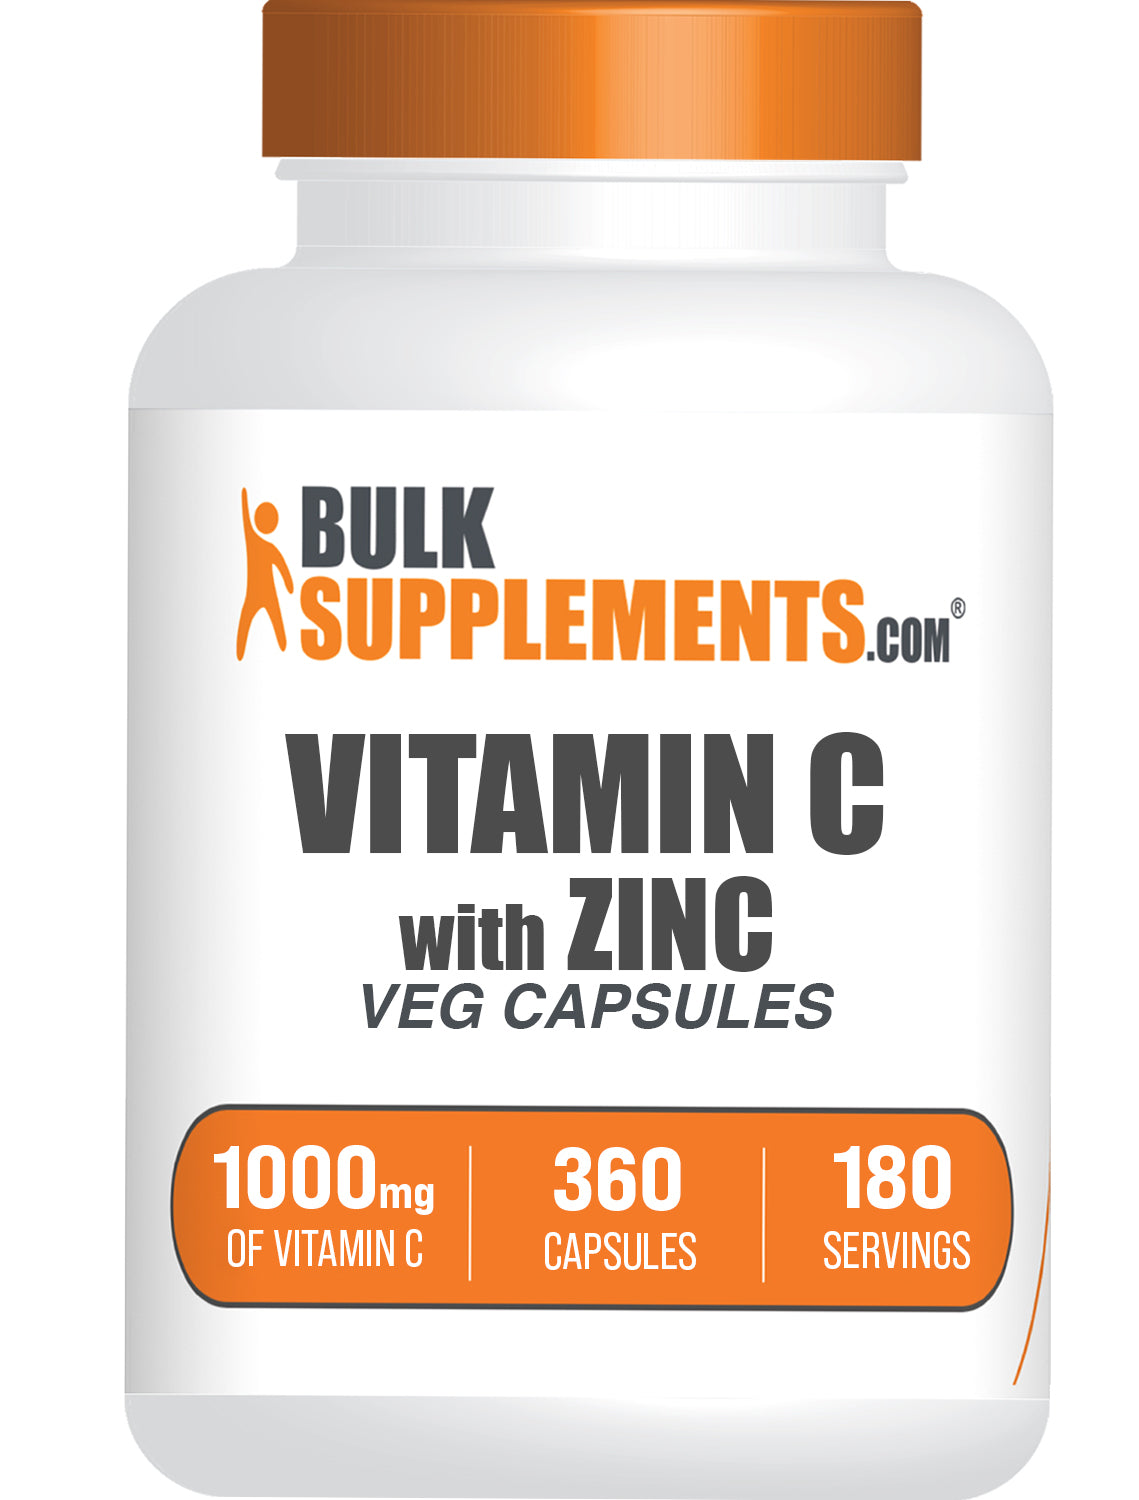 Vitamin C with Zinc Capsule Bottle